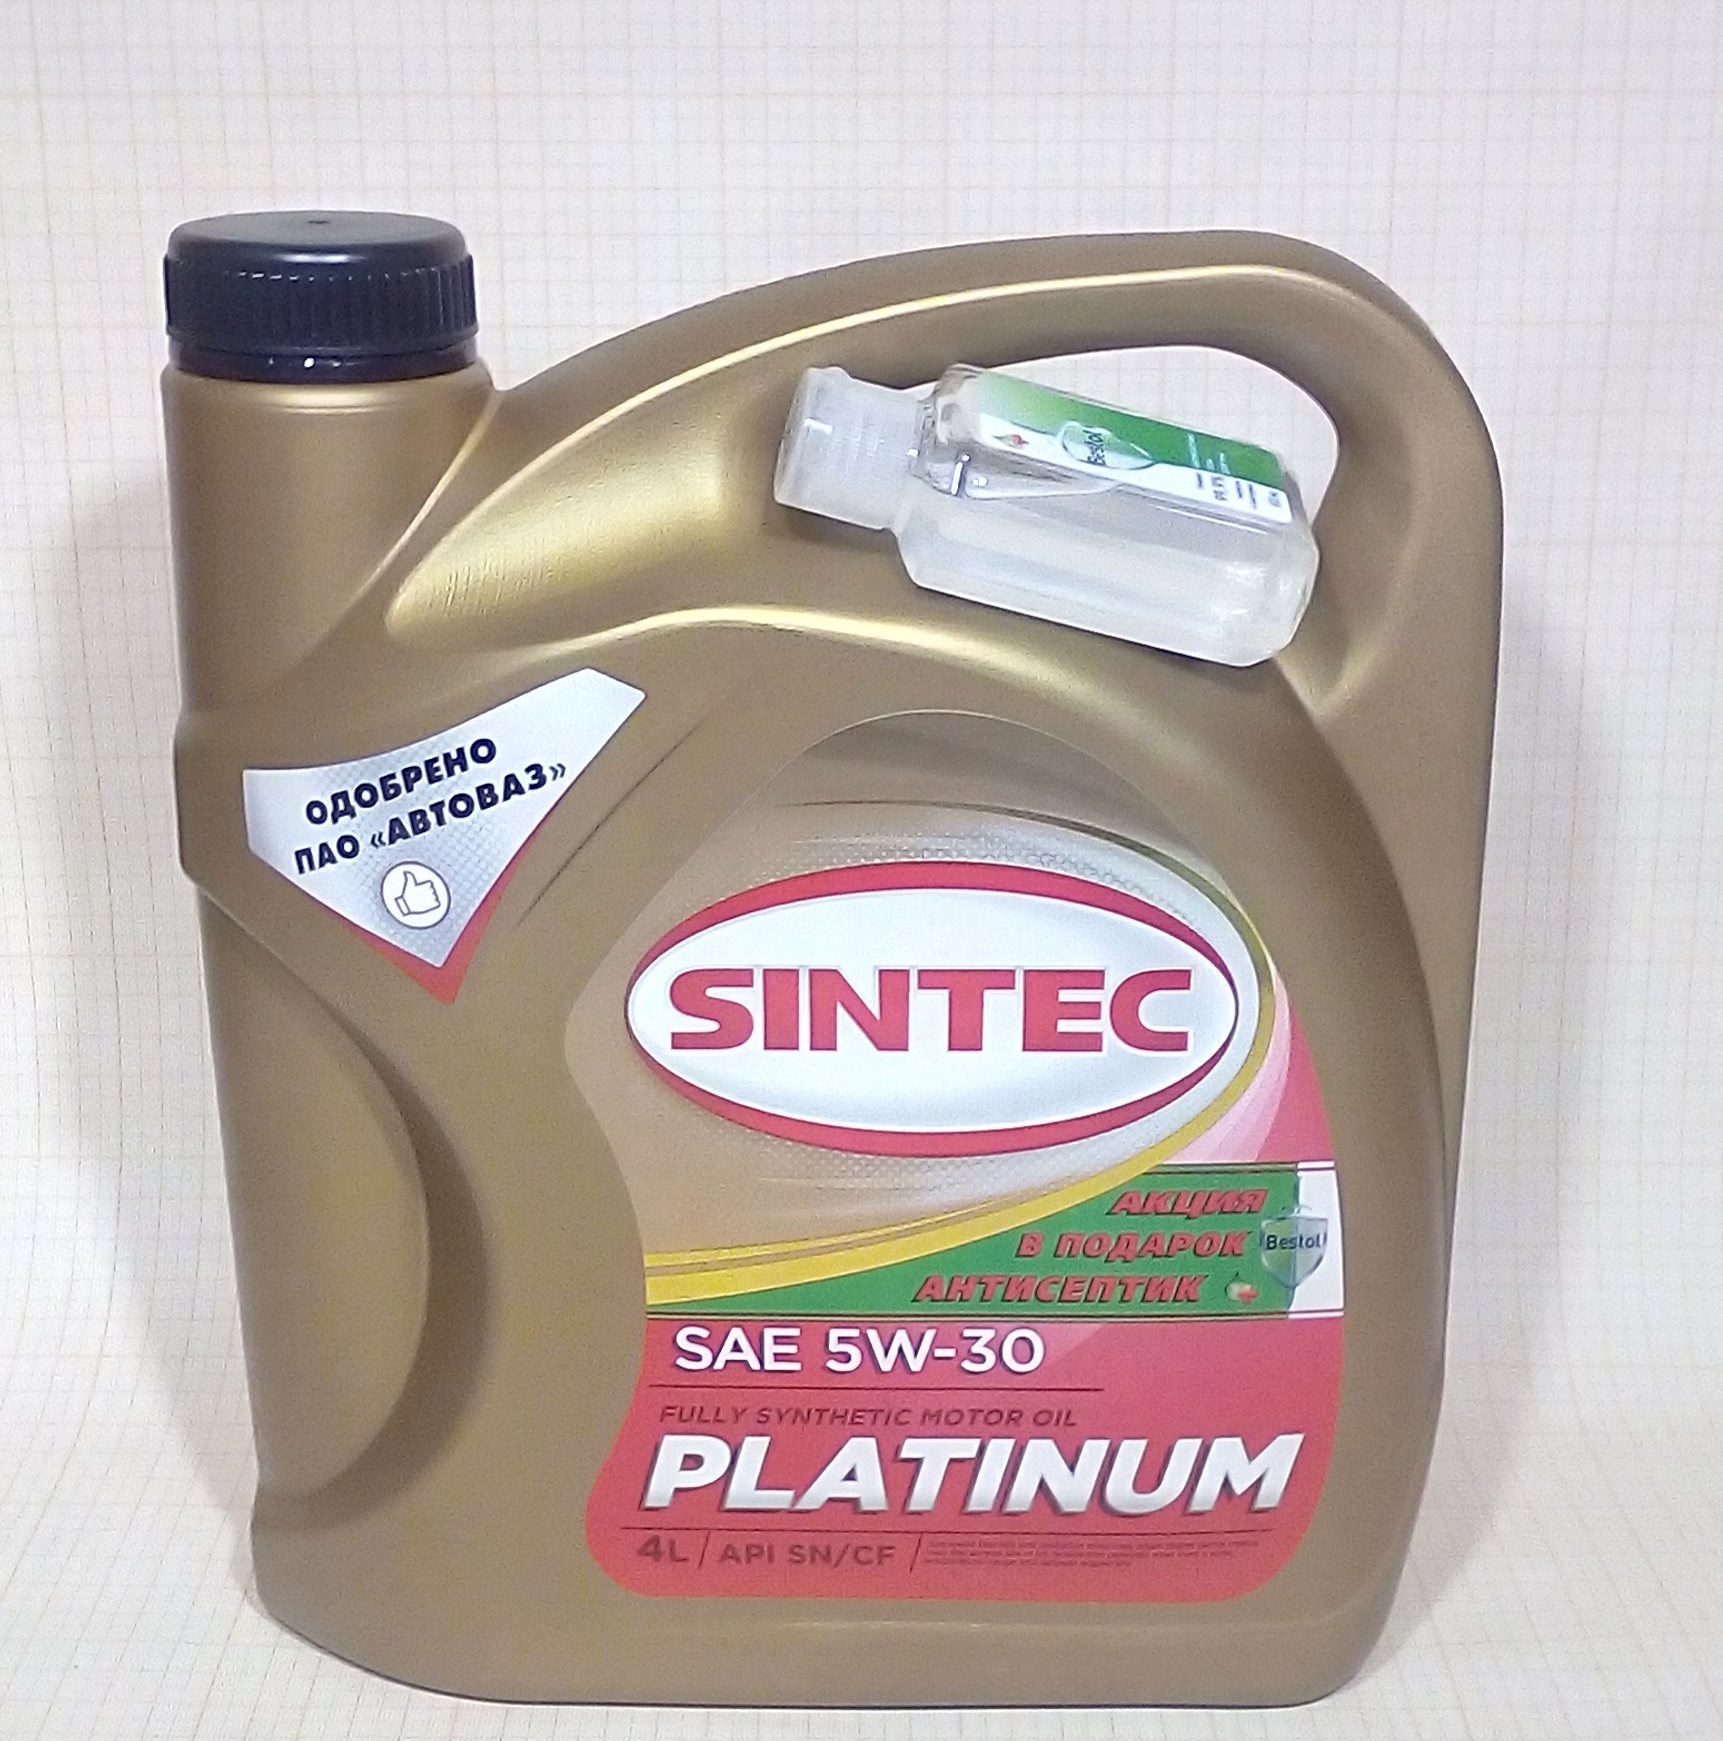 SINTOIL Platinium 5W-30  4л (синт) SN/CF АКЦИЯ!!! антисептик в подарок  масло моторное